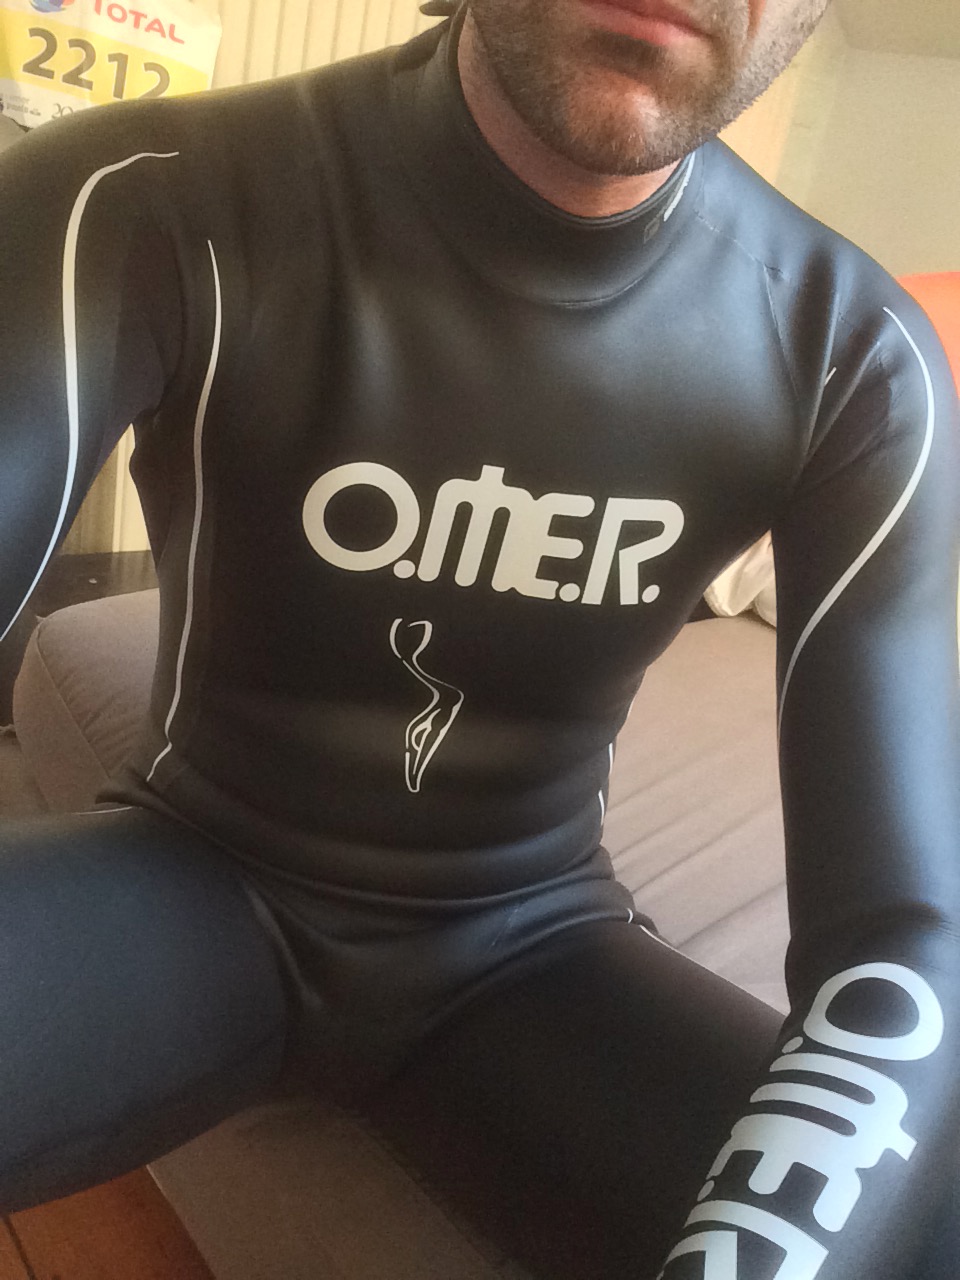 Mots-clés: neoprene wetsuit triathlon OMER skintight